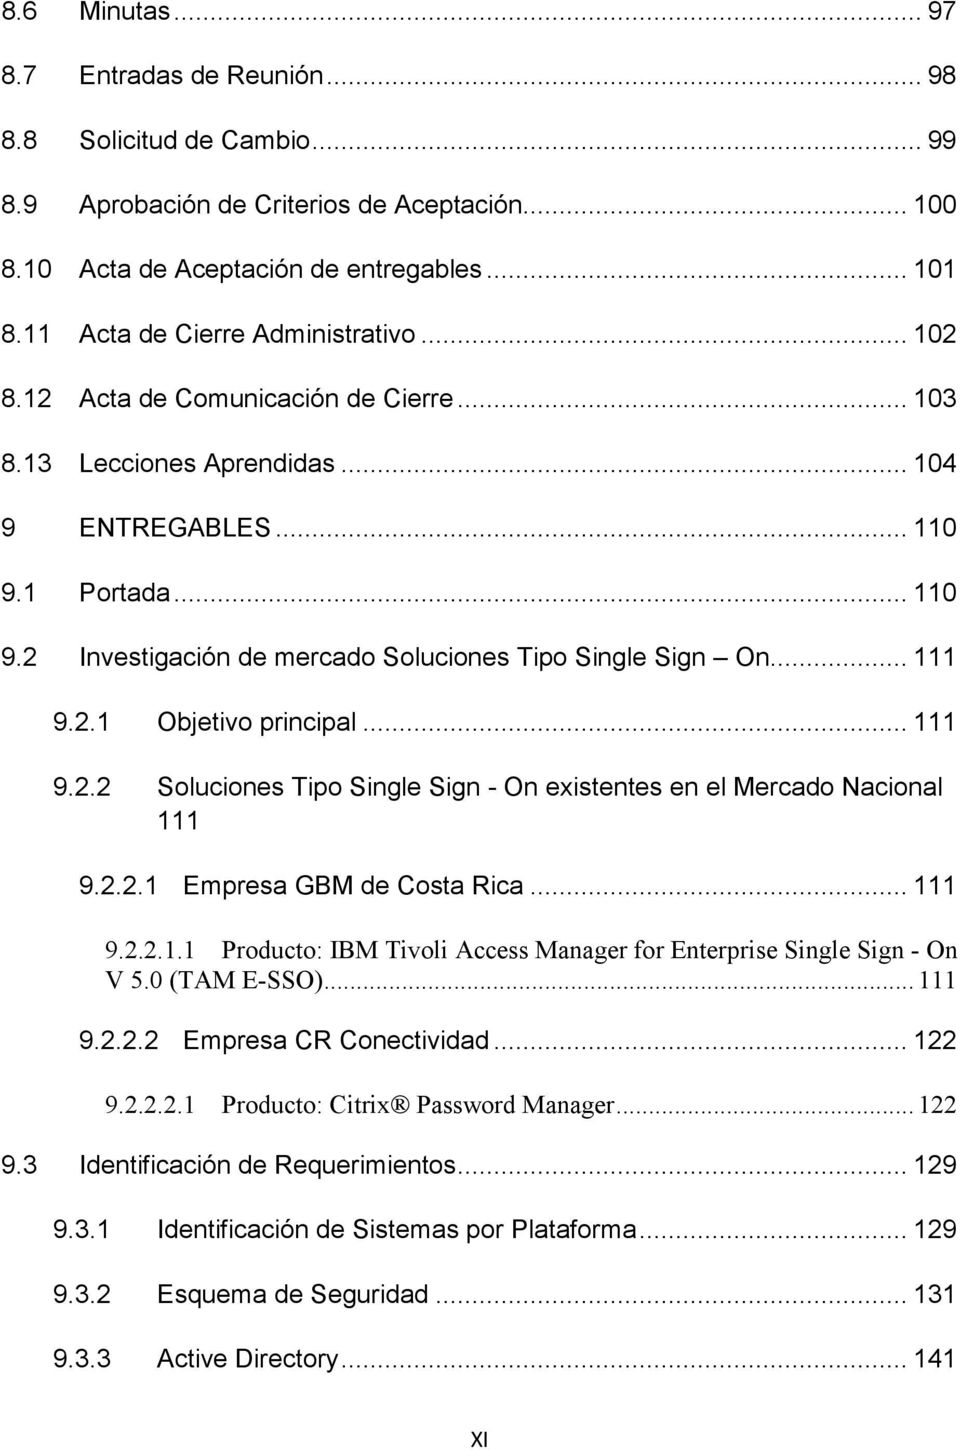 .. 111 9.2.1 Objetivo principal... 111 9.2.2 Soluciones Tipo Single Sign - On existentes en el Mercado Nacional 111 9.2.2.1 Empresa GBM de Costa Rica... 111 9.2.2.1.1 Producto: IBM Tivoli Access Manager for Enterprise Single Sign - On V 5.